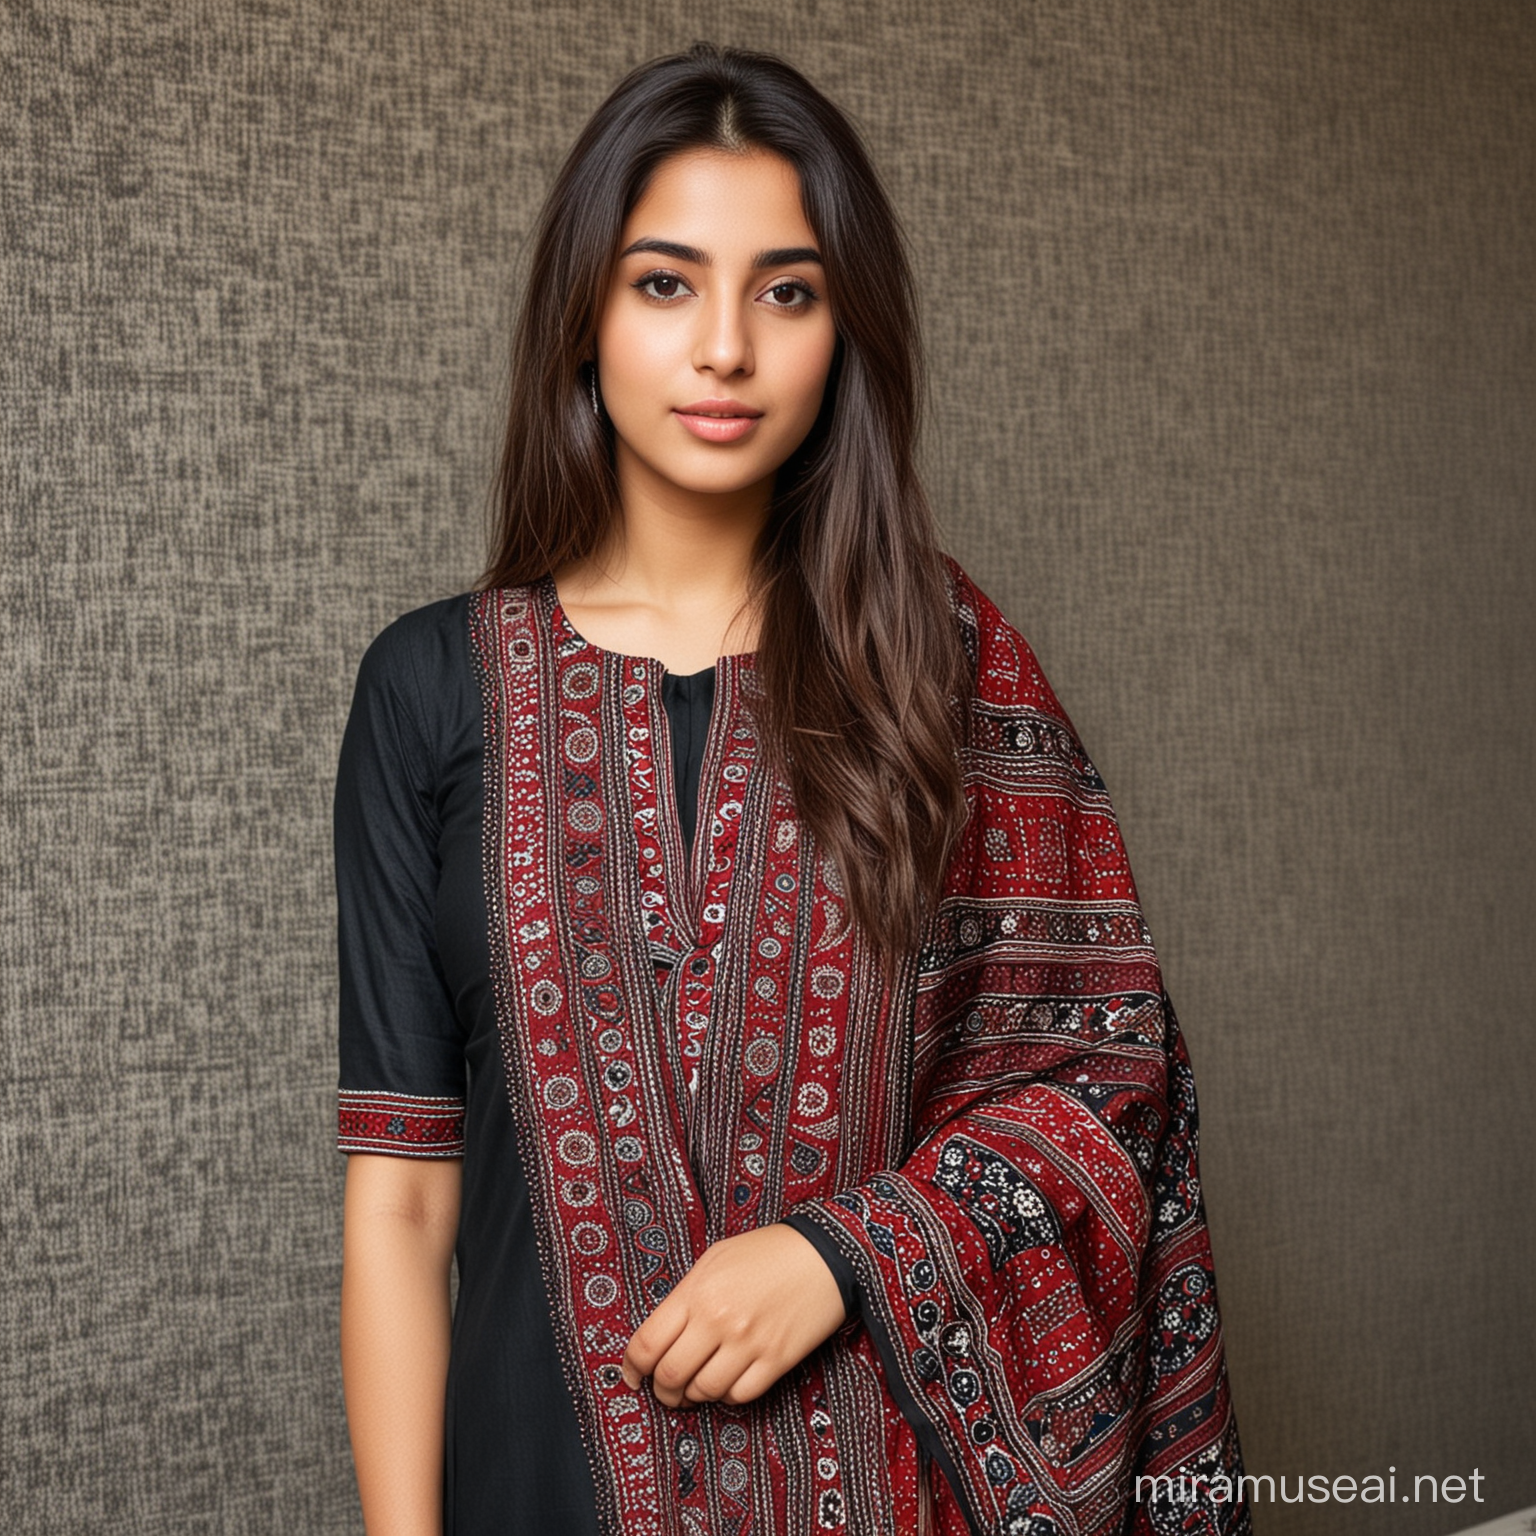 Elegant Sindhi Woman Adorned in Ajrak Traditional Attire